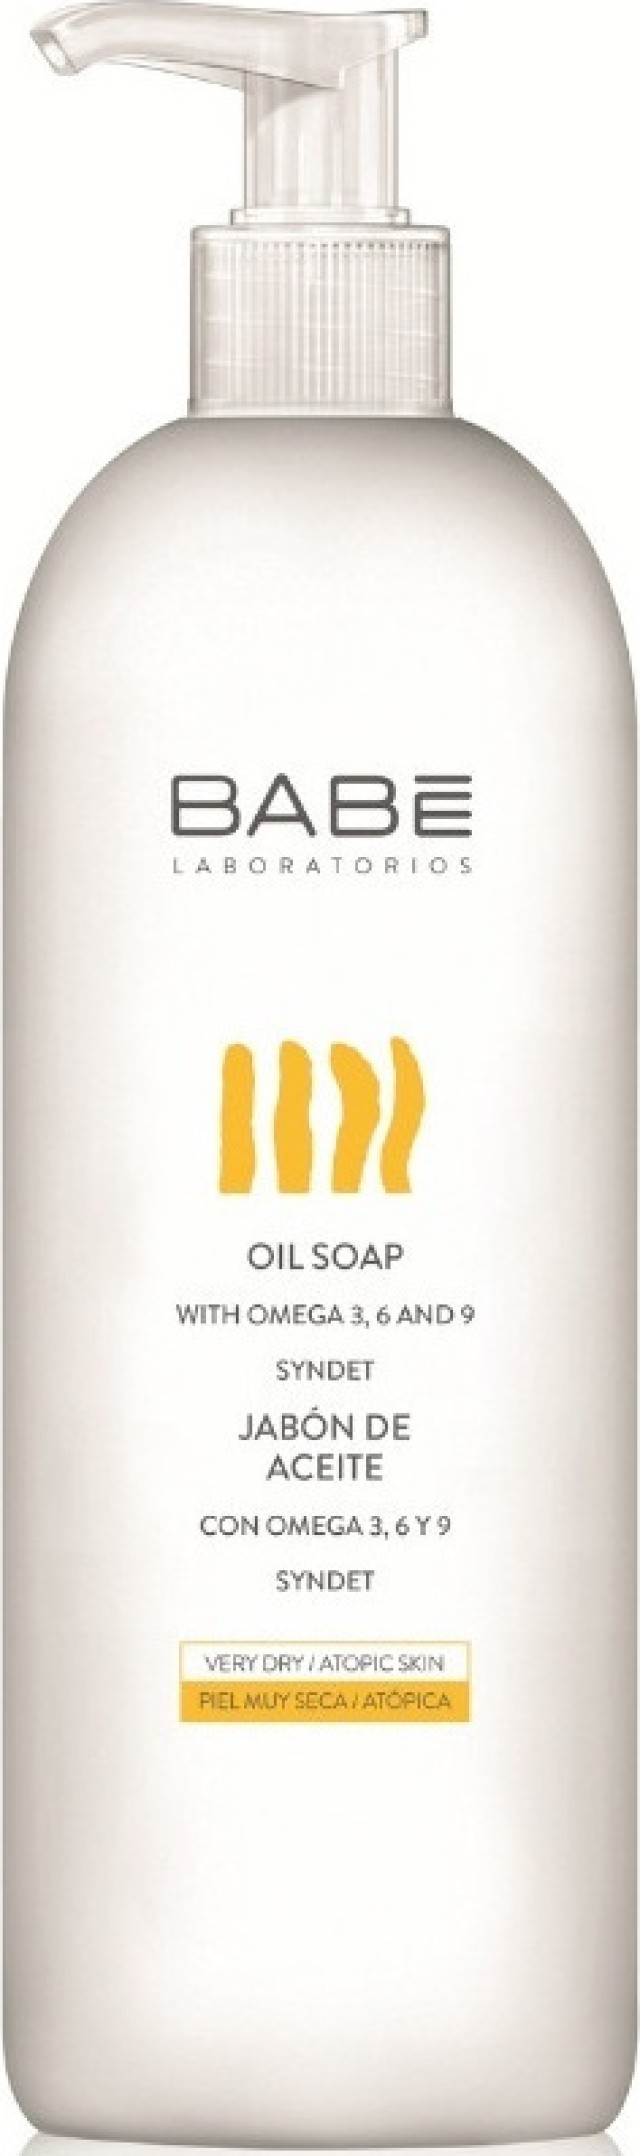 Babe Body Oil Soap Αφρόλουτρο Εμπλουτισμένο με Έλαια για Ξηρό/Ατοπικό Δέρμα 500ml Eκπτωση -20%